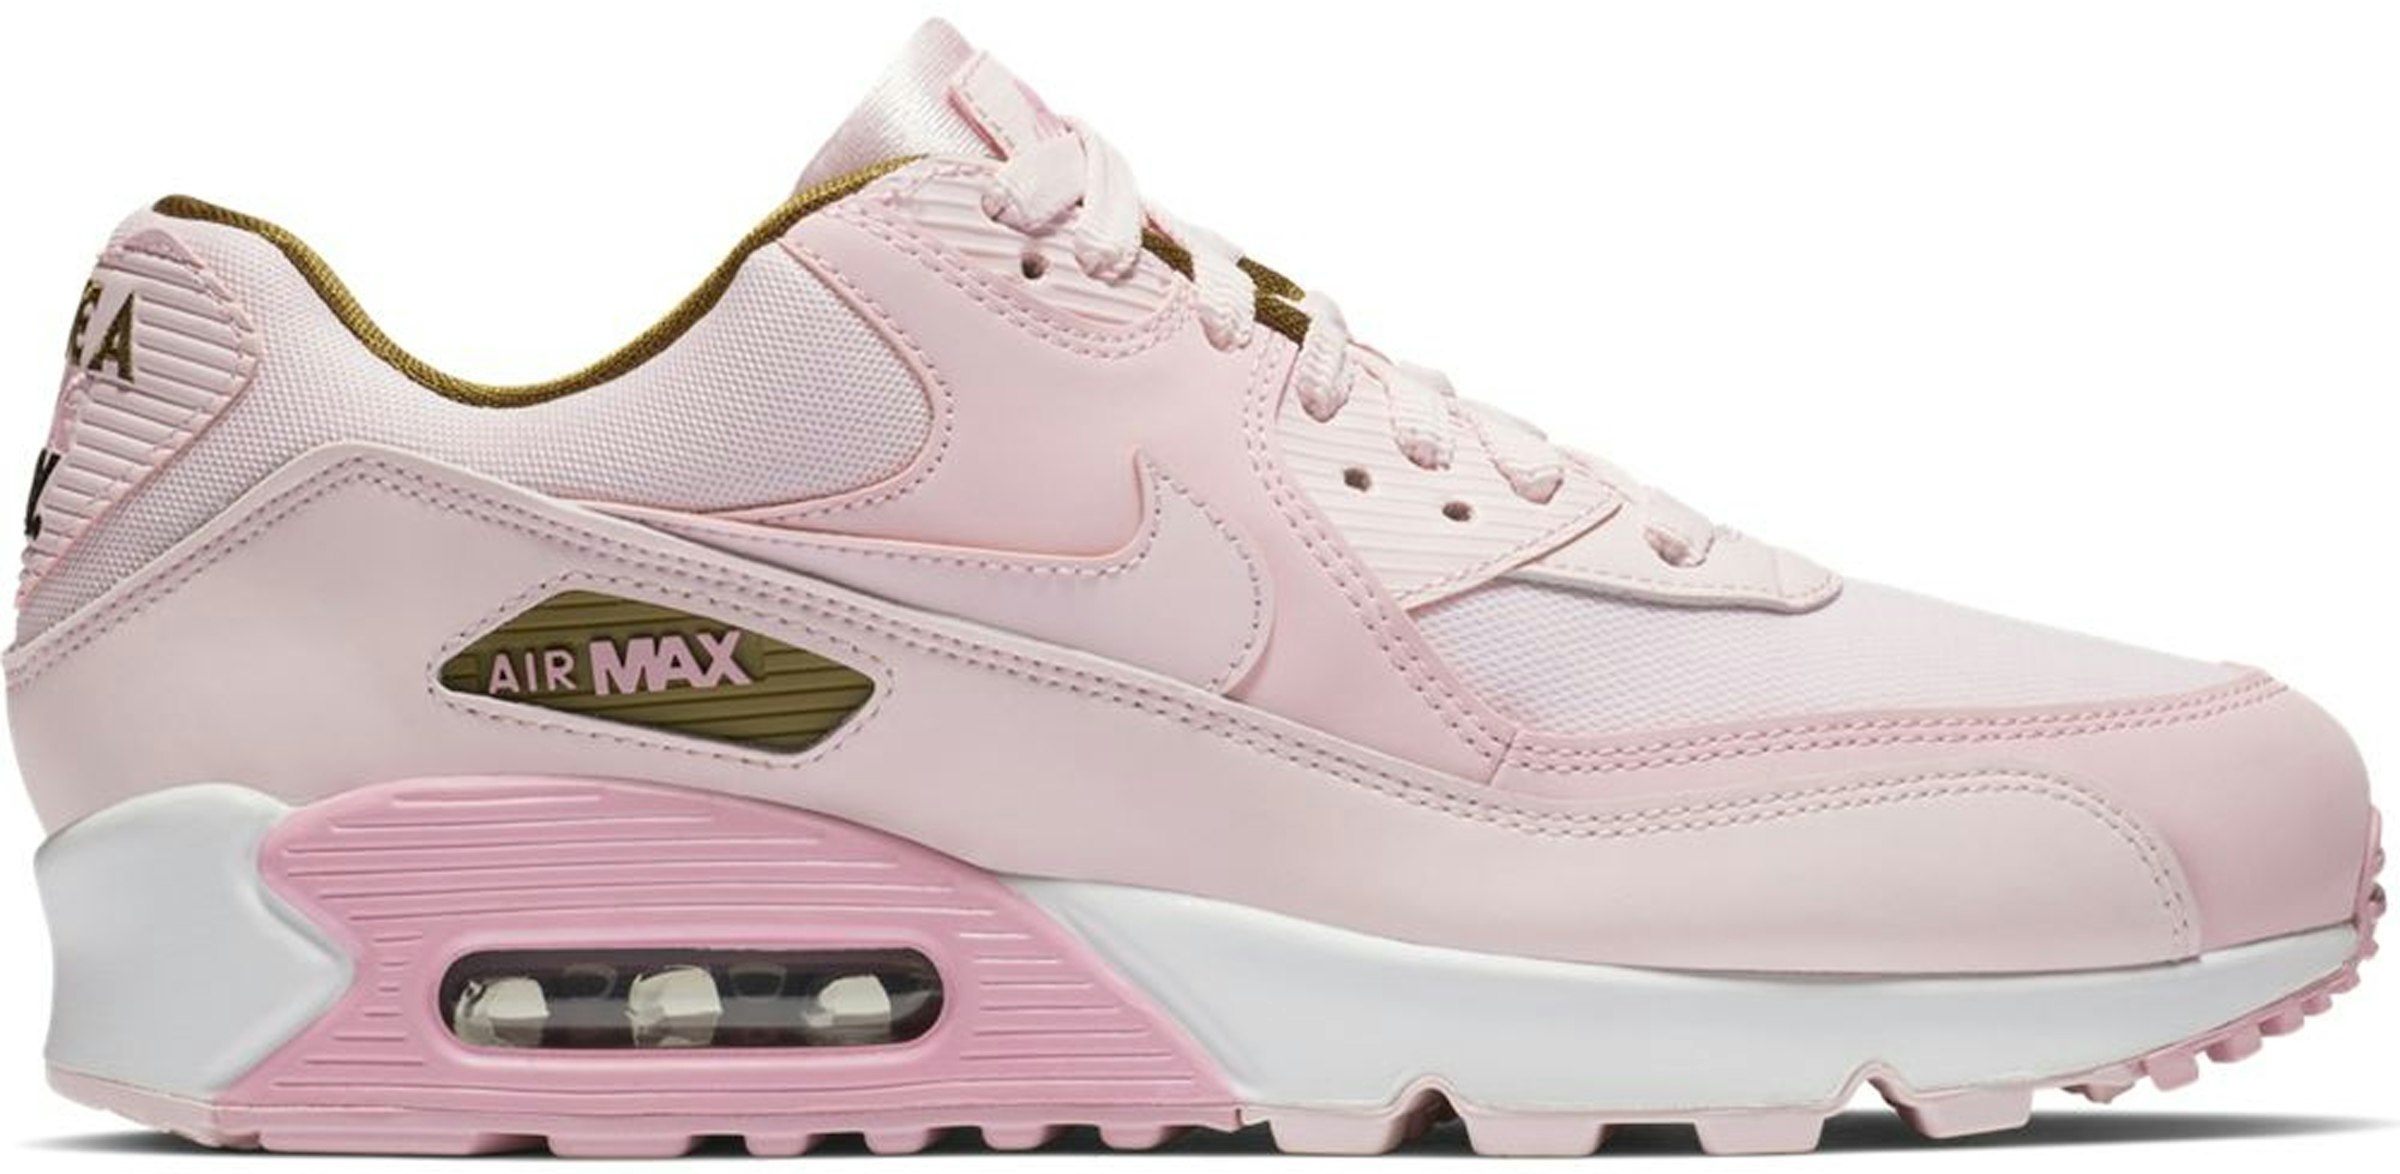 Nike Air Max 90 Have a Foam (Women's) - 881105-605 - US